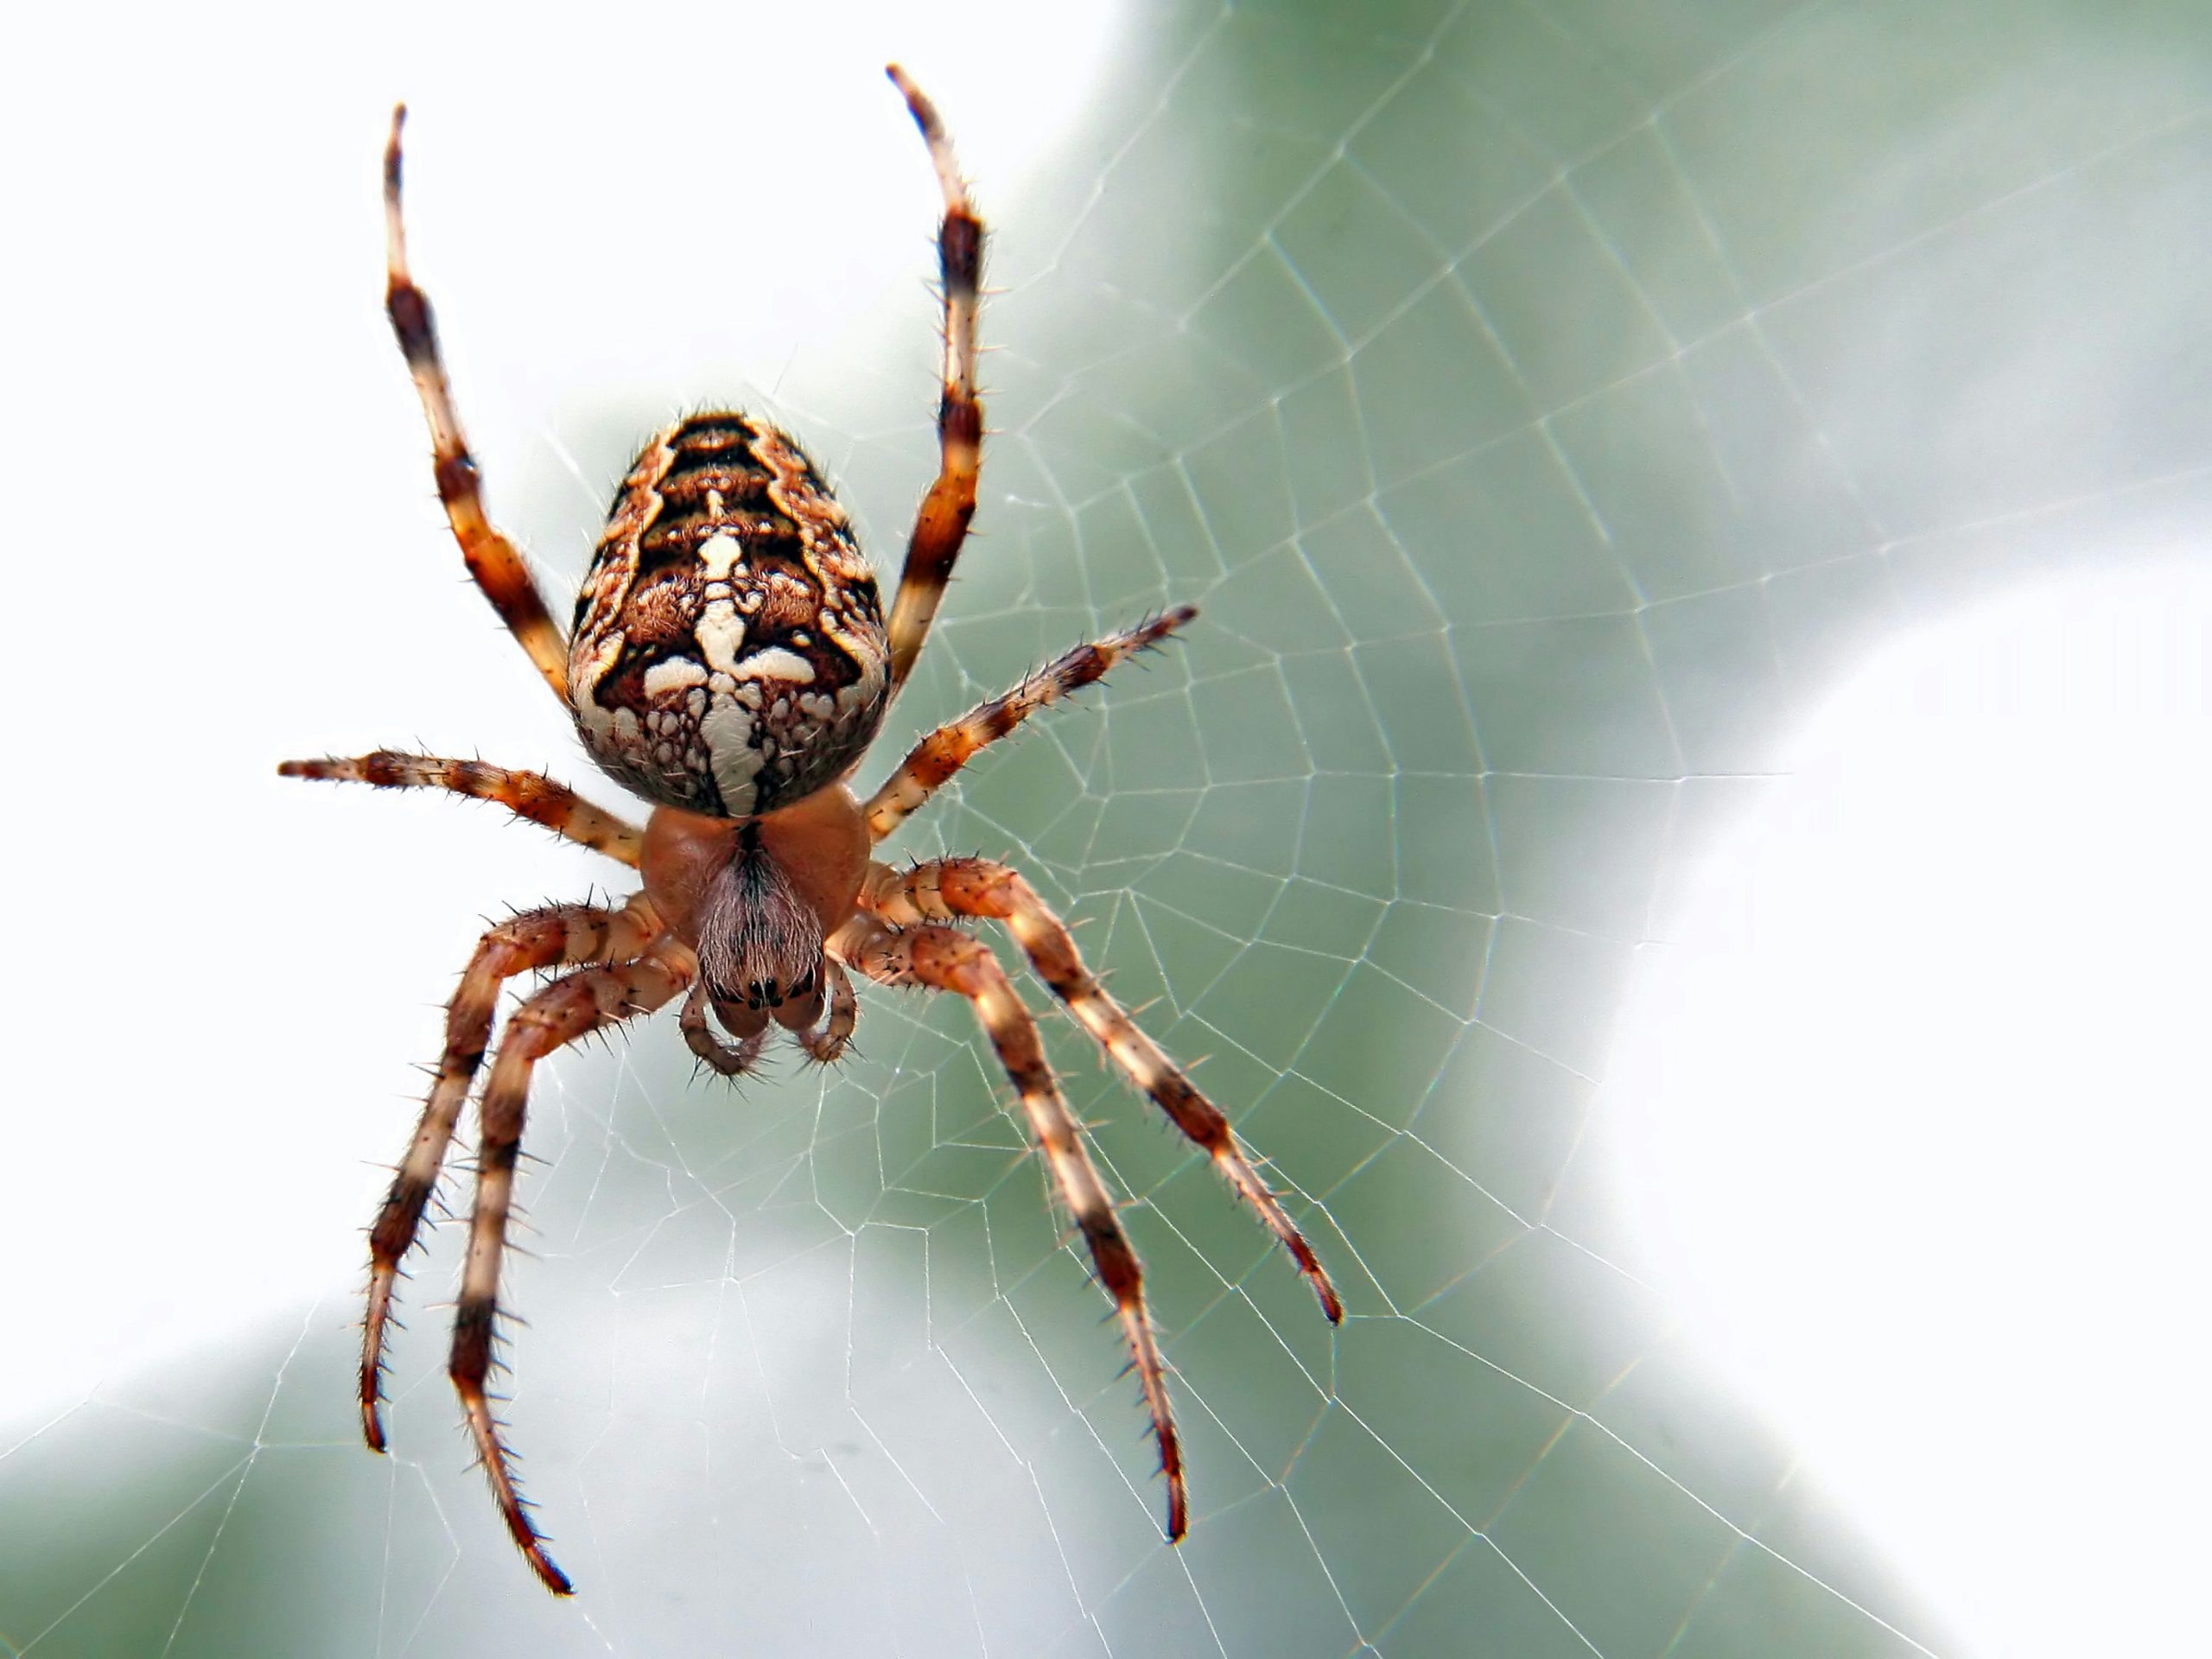 Spider spray safe for pets - Spider on web